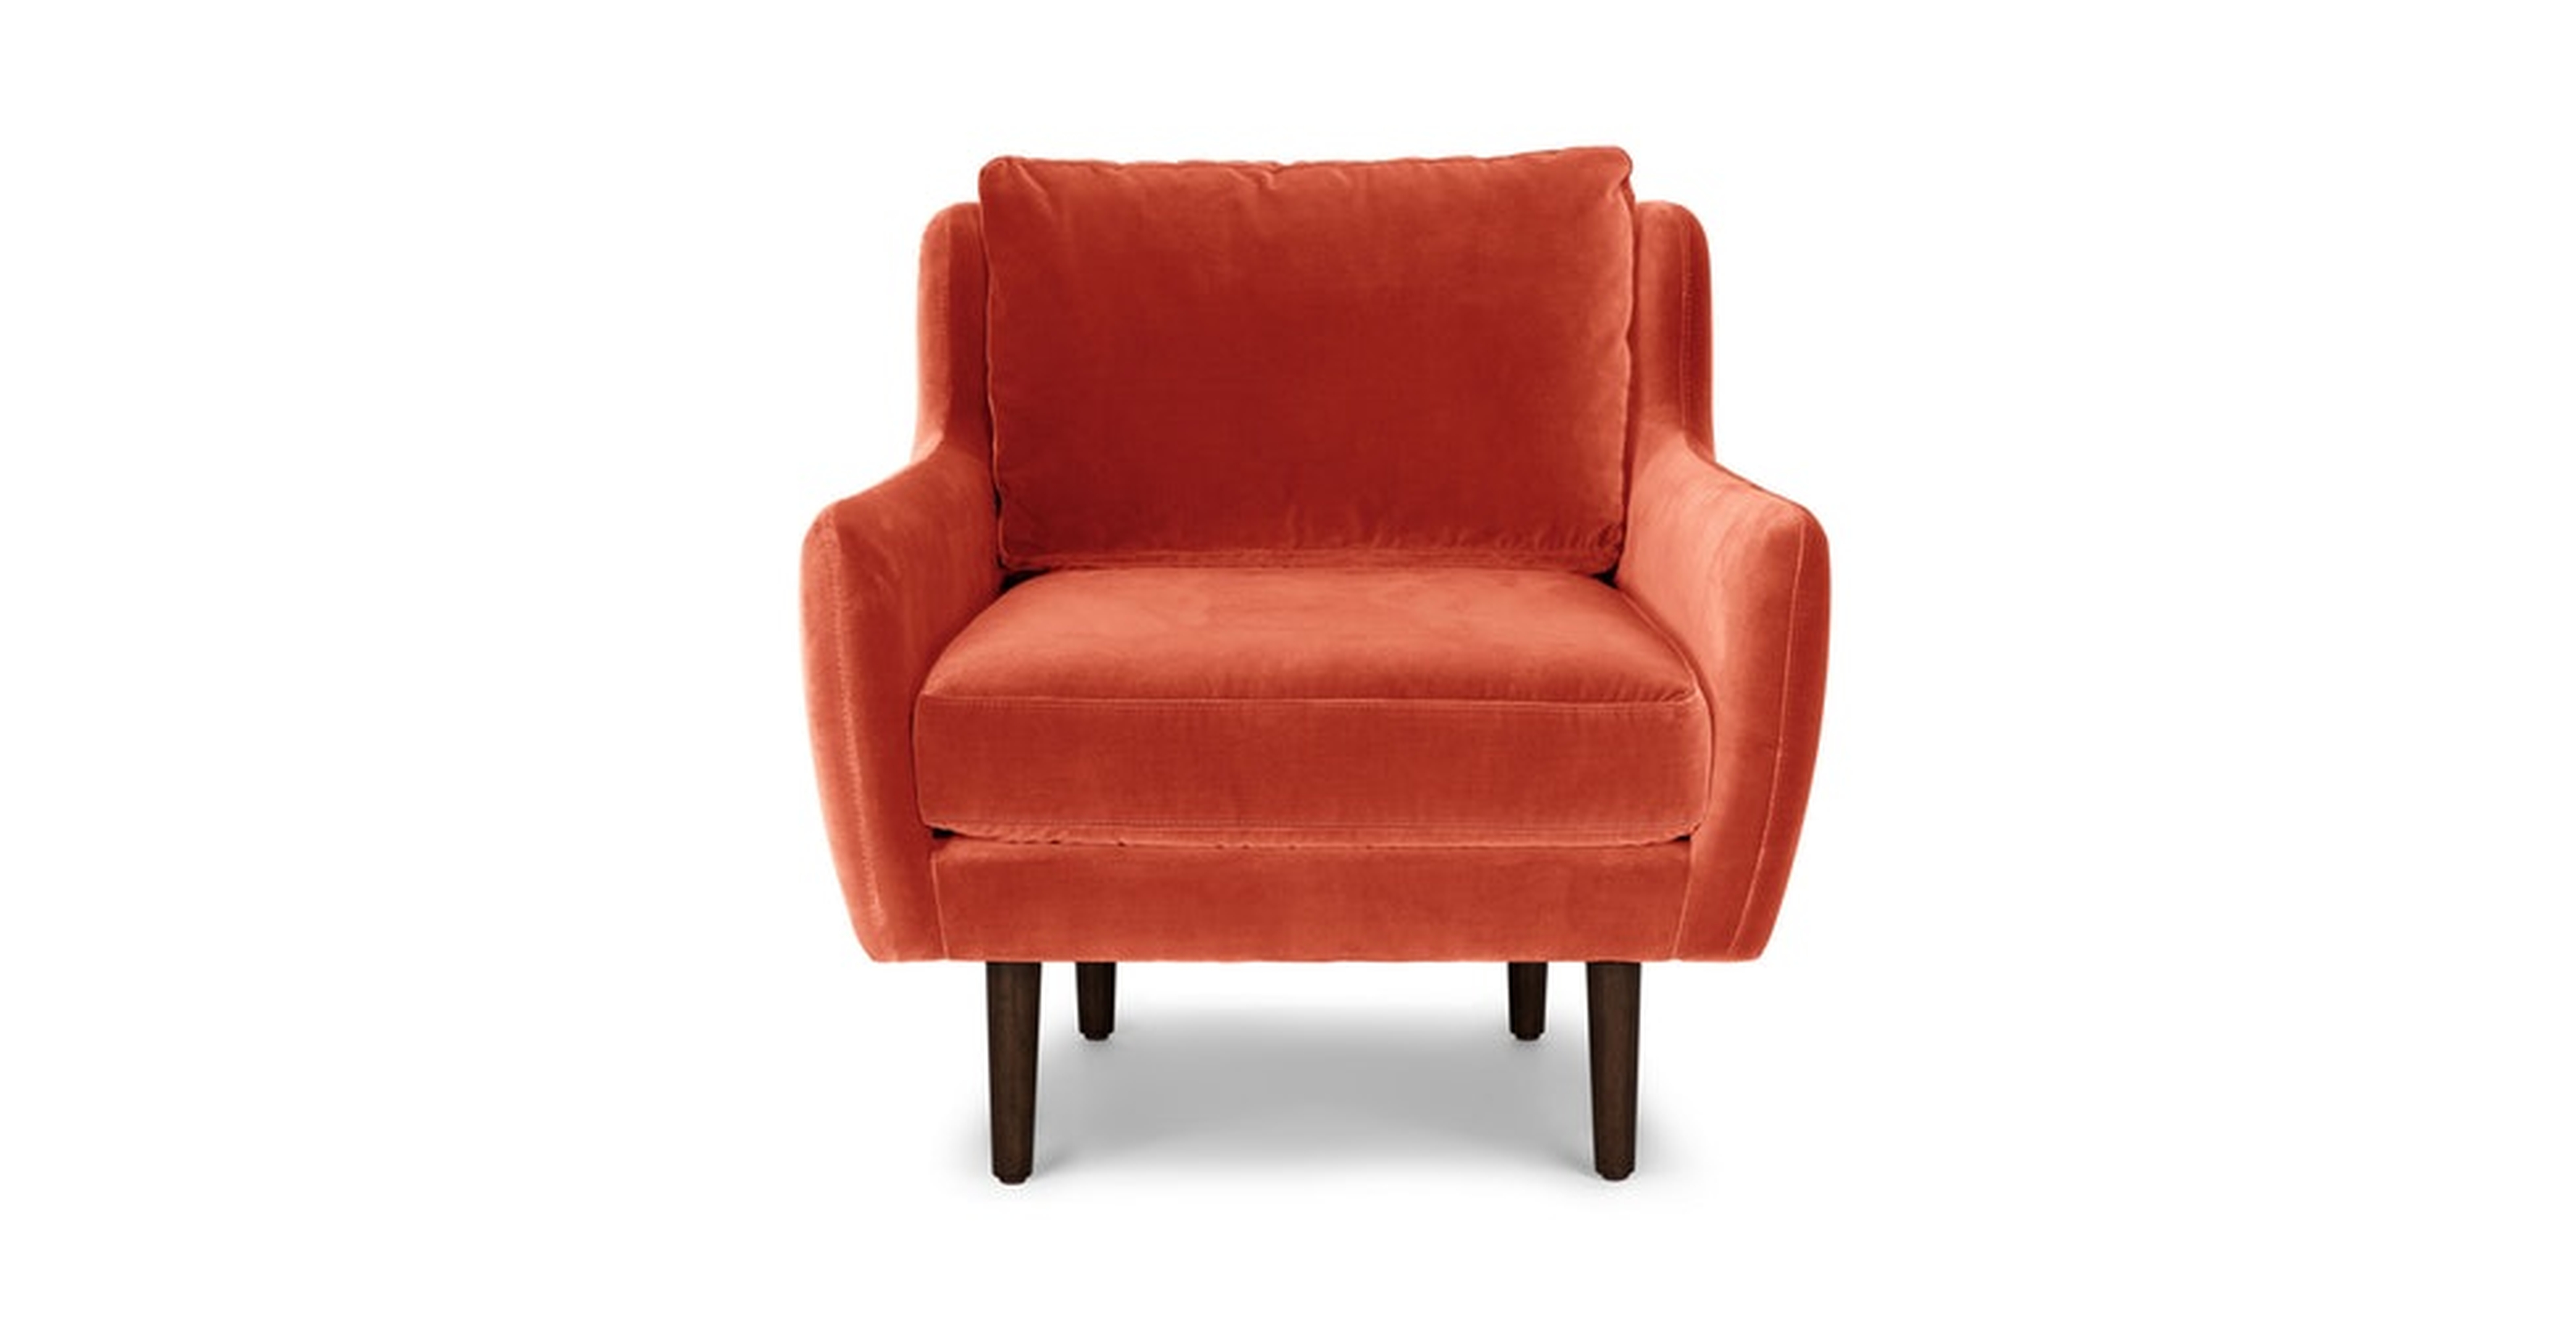 Matrix Persimmon Orange Chair - Article